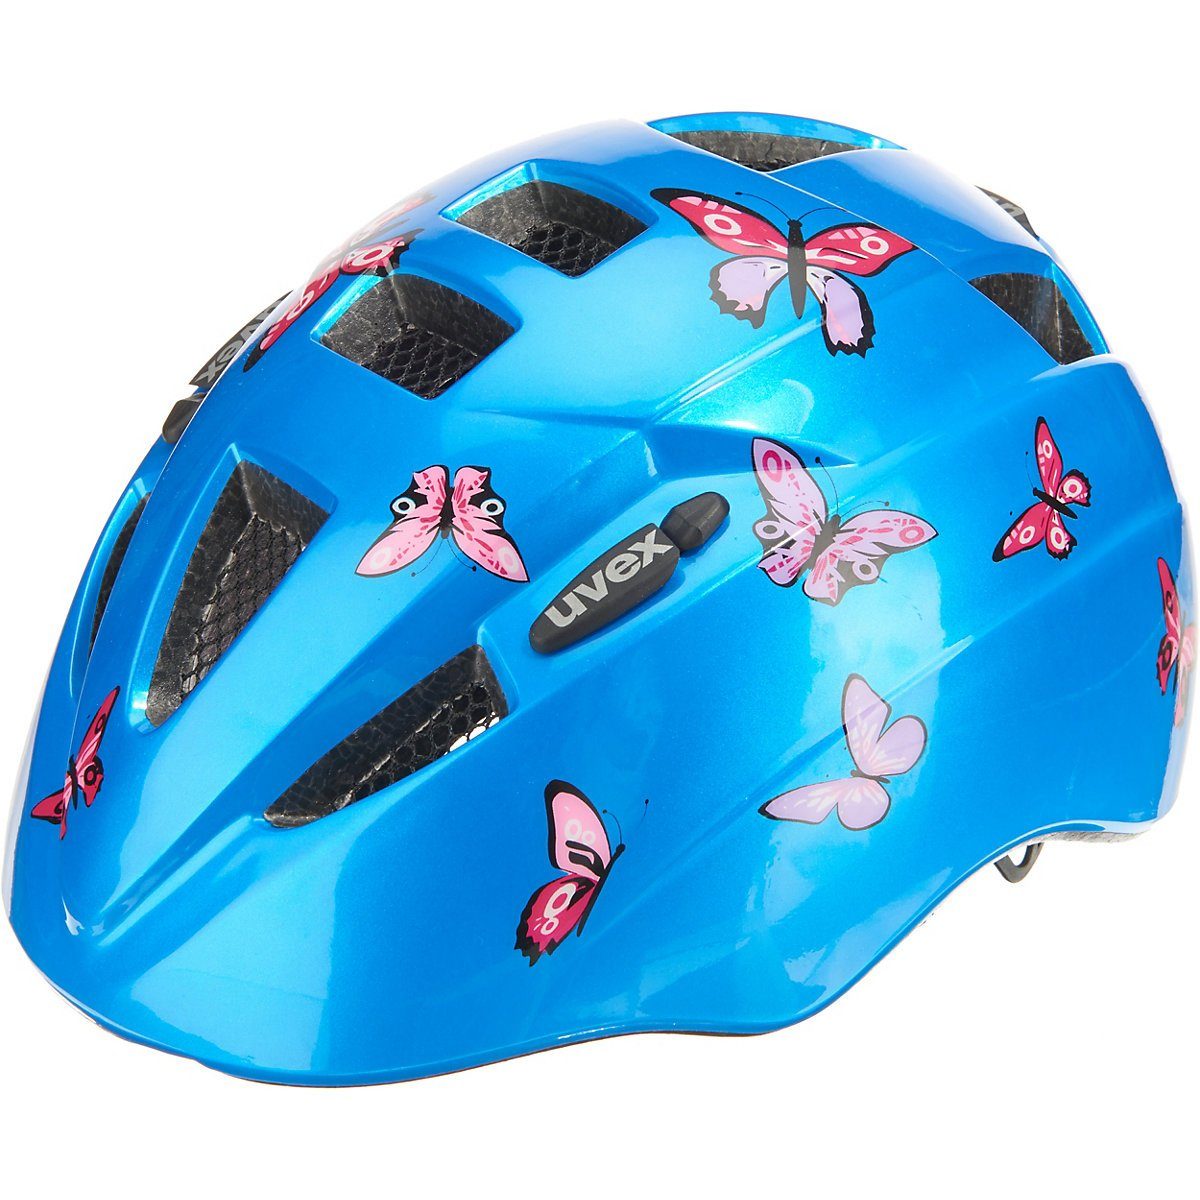 Uvex Fahrradhelm Fahrradhelm kid butterfly Gr. 46-52, blau/rosa